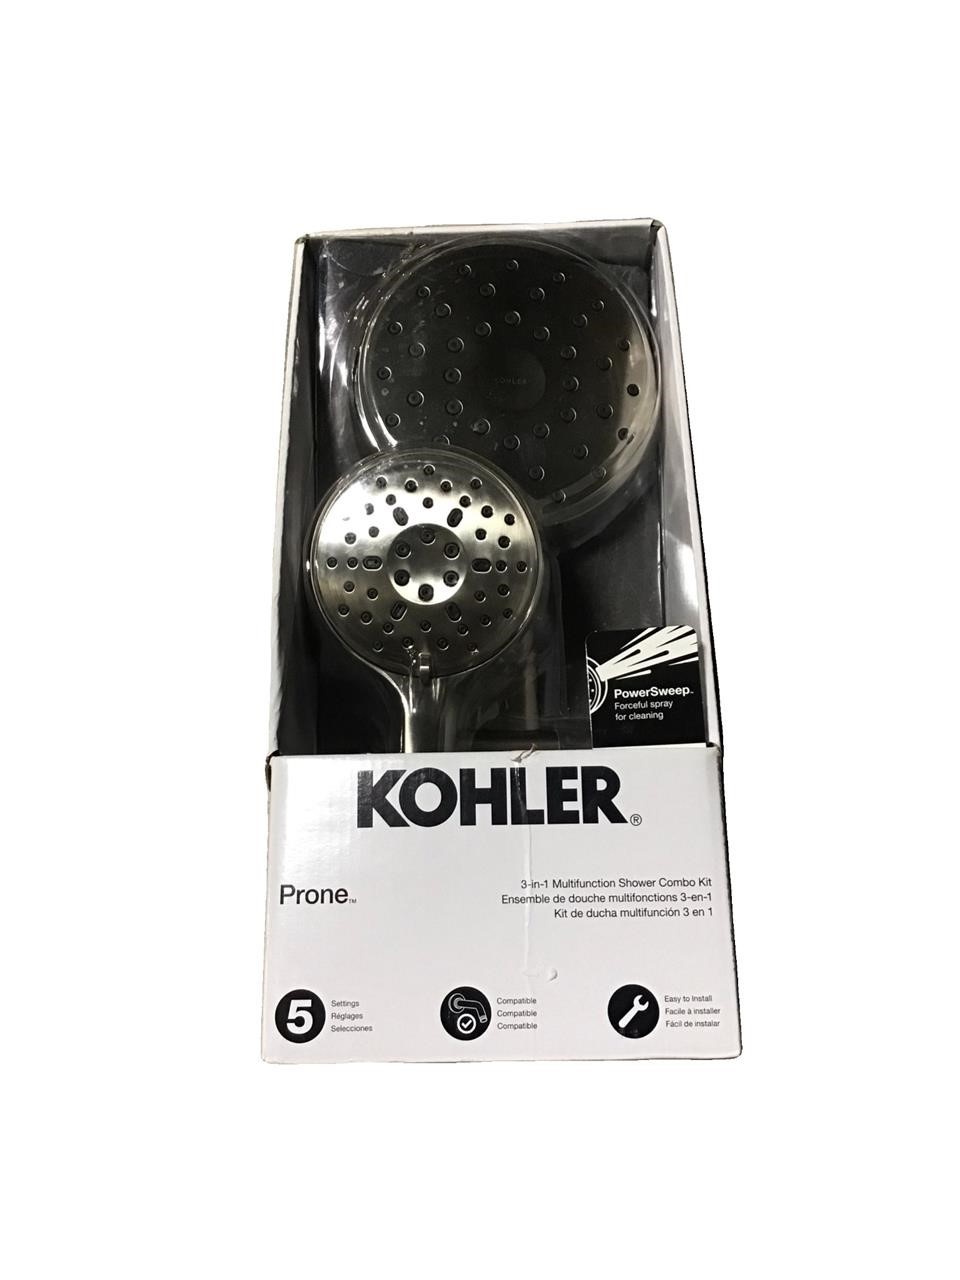 Kohler Prone 3-in-1 Multifunction Shower Head